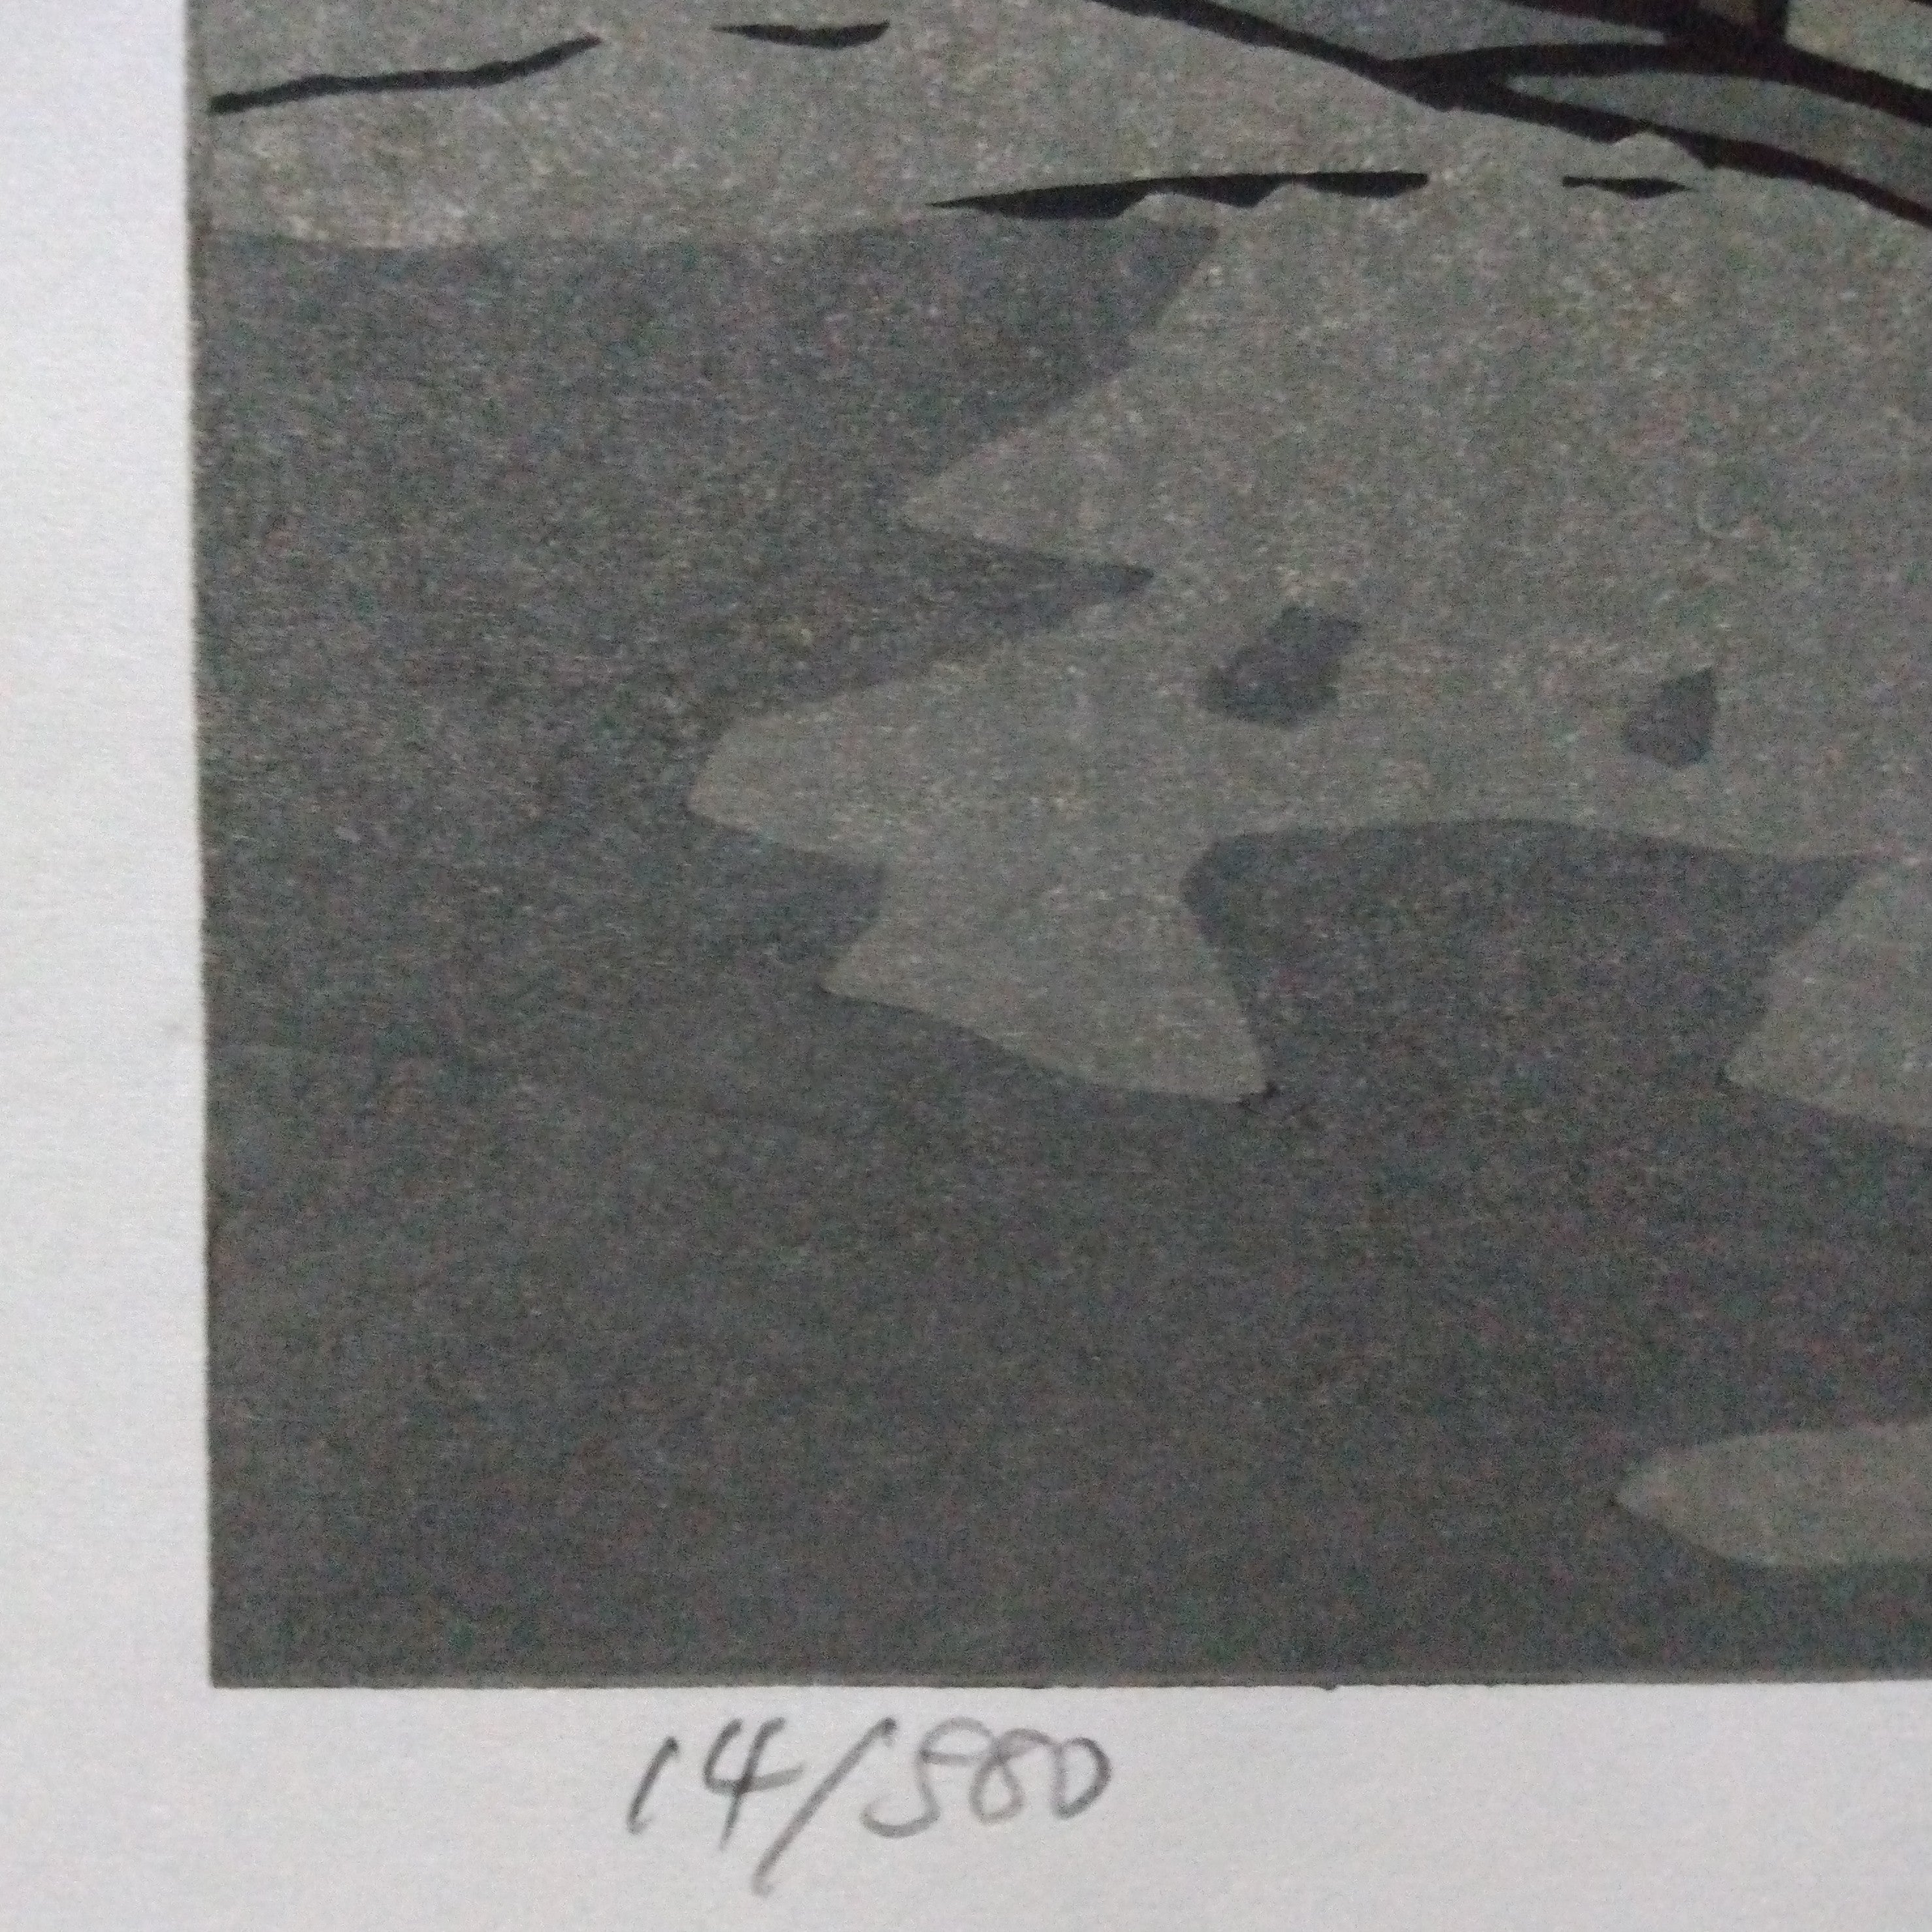 Woodblock Print by Katsuyuki Nishijima, "Morning in Sakamoto" (Sakamoto no Asa)